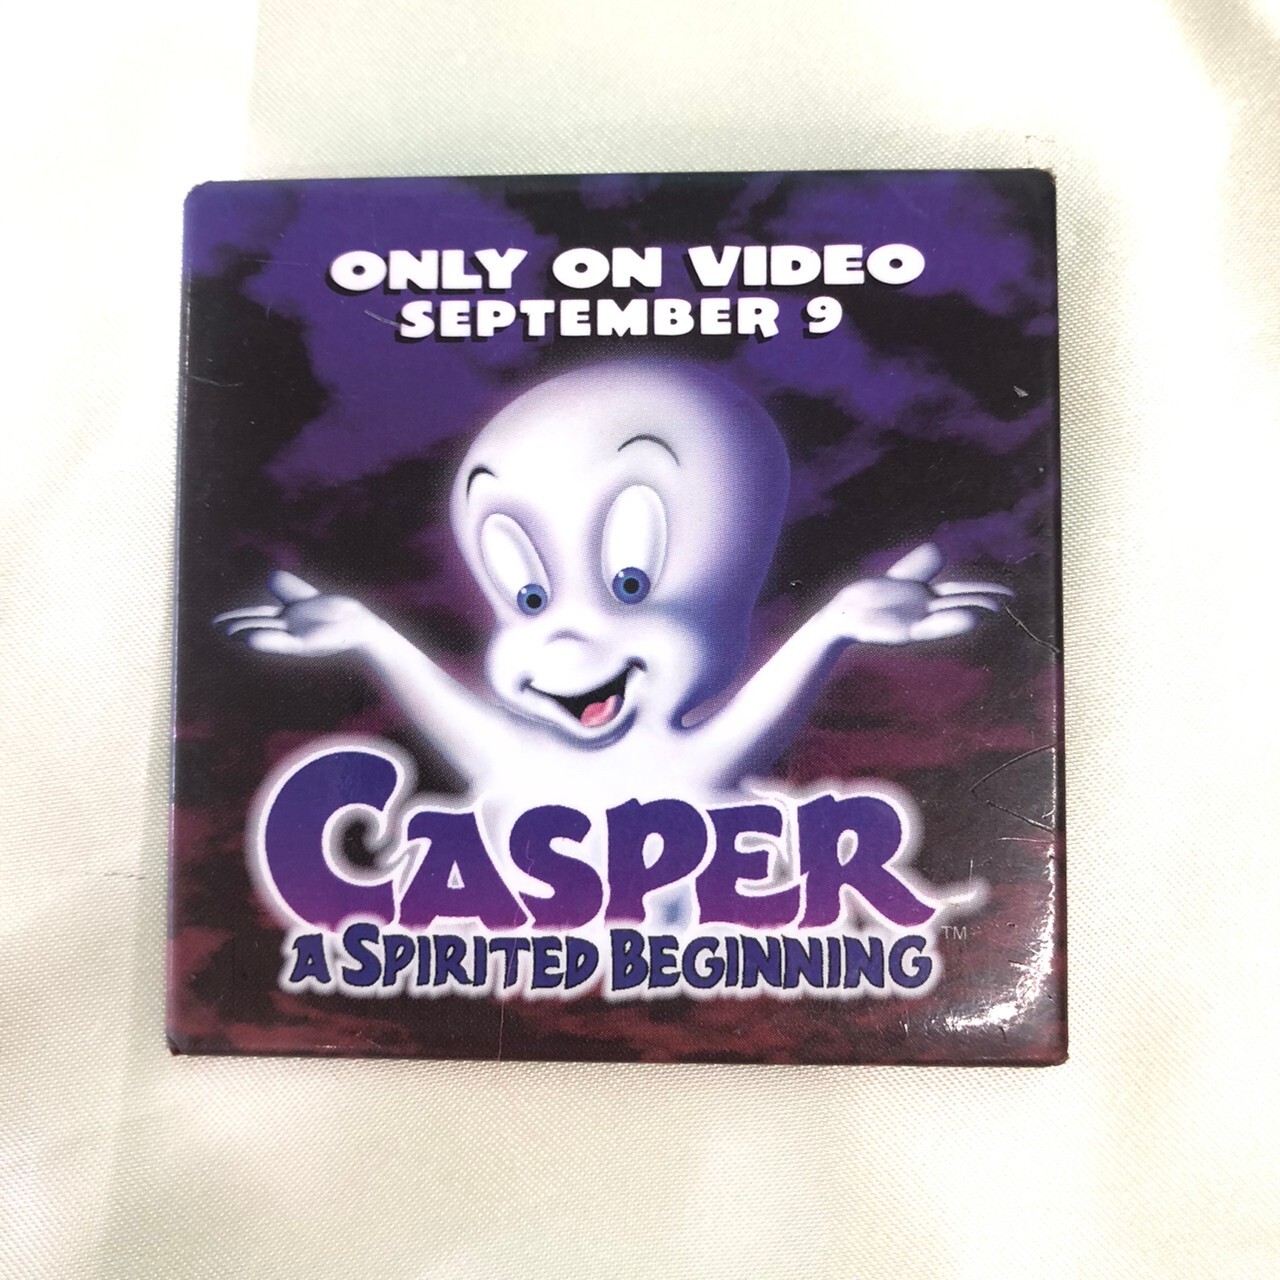 90s キャスパースピリットビギニング 販促缶バッジ Casper A Sprited Beginning Bonus Badge The Puppez E Shop ザ パペッツ松本 Webショップ